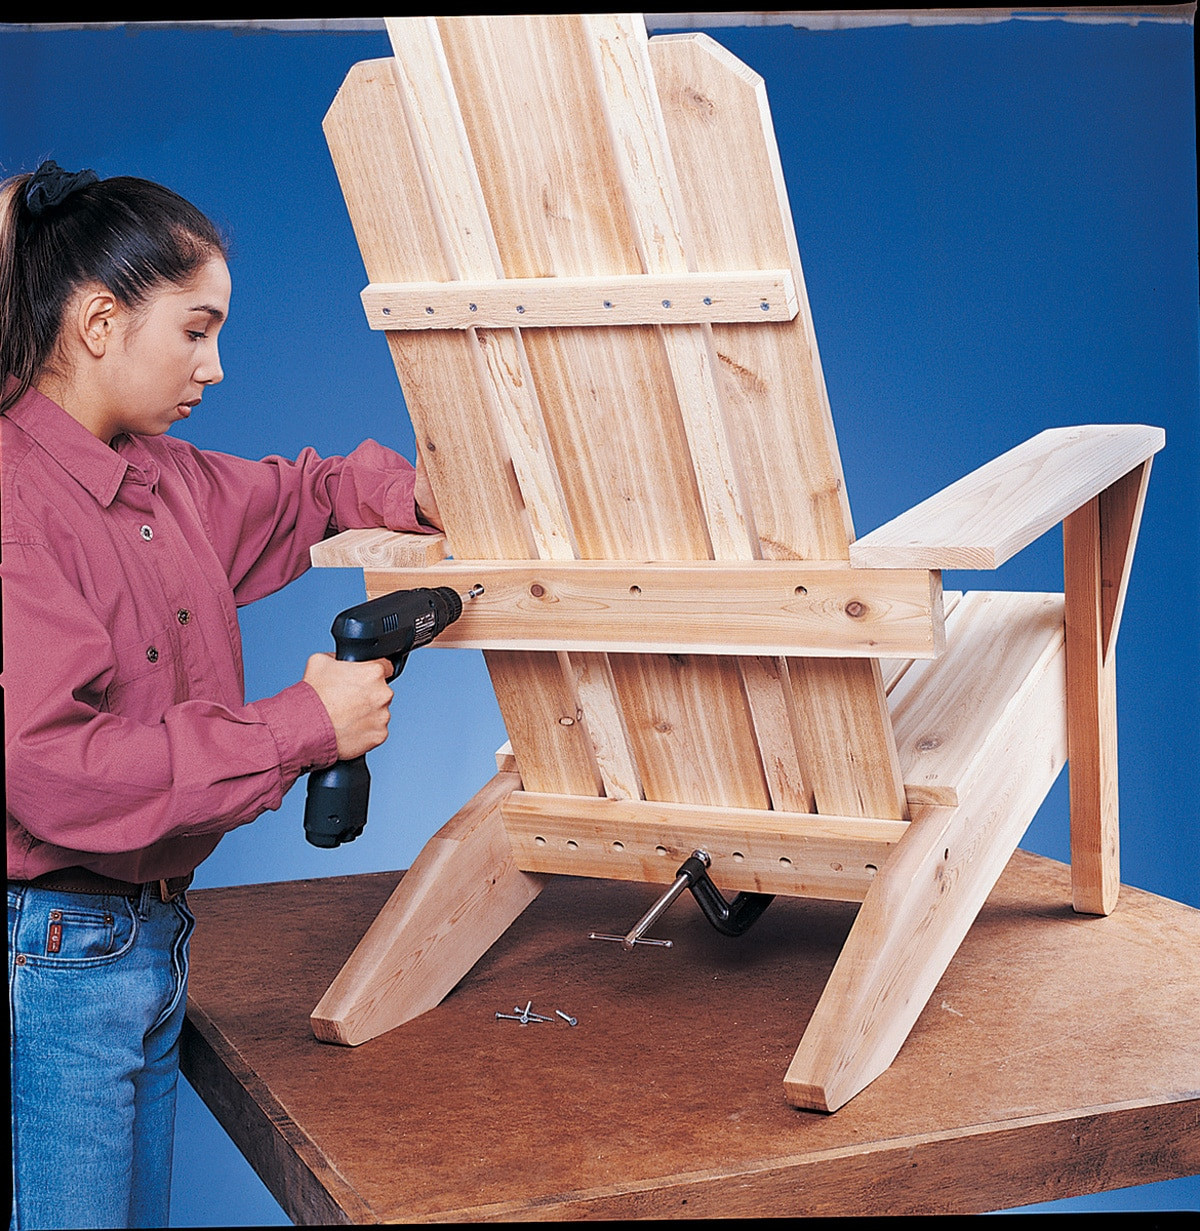 Diy Adirondack Chair Kit Fresh Build An Adirondack Chair With Plans Diy Of Diy Adirondack Chair Kit 1 